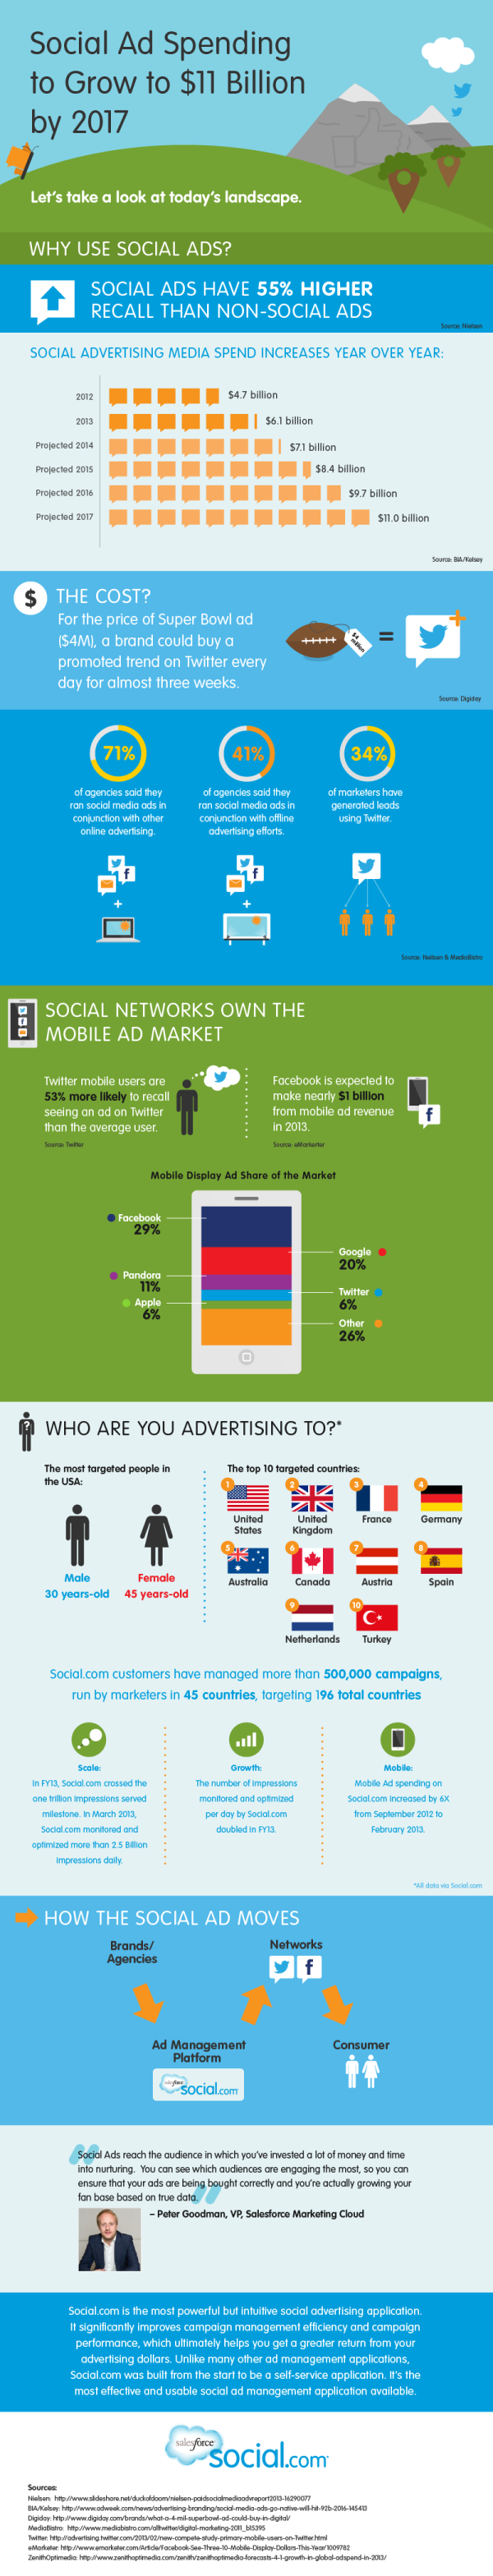 Social Media Ads Infographic resized 600